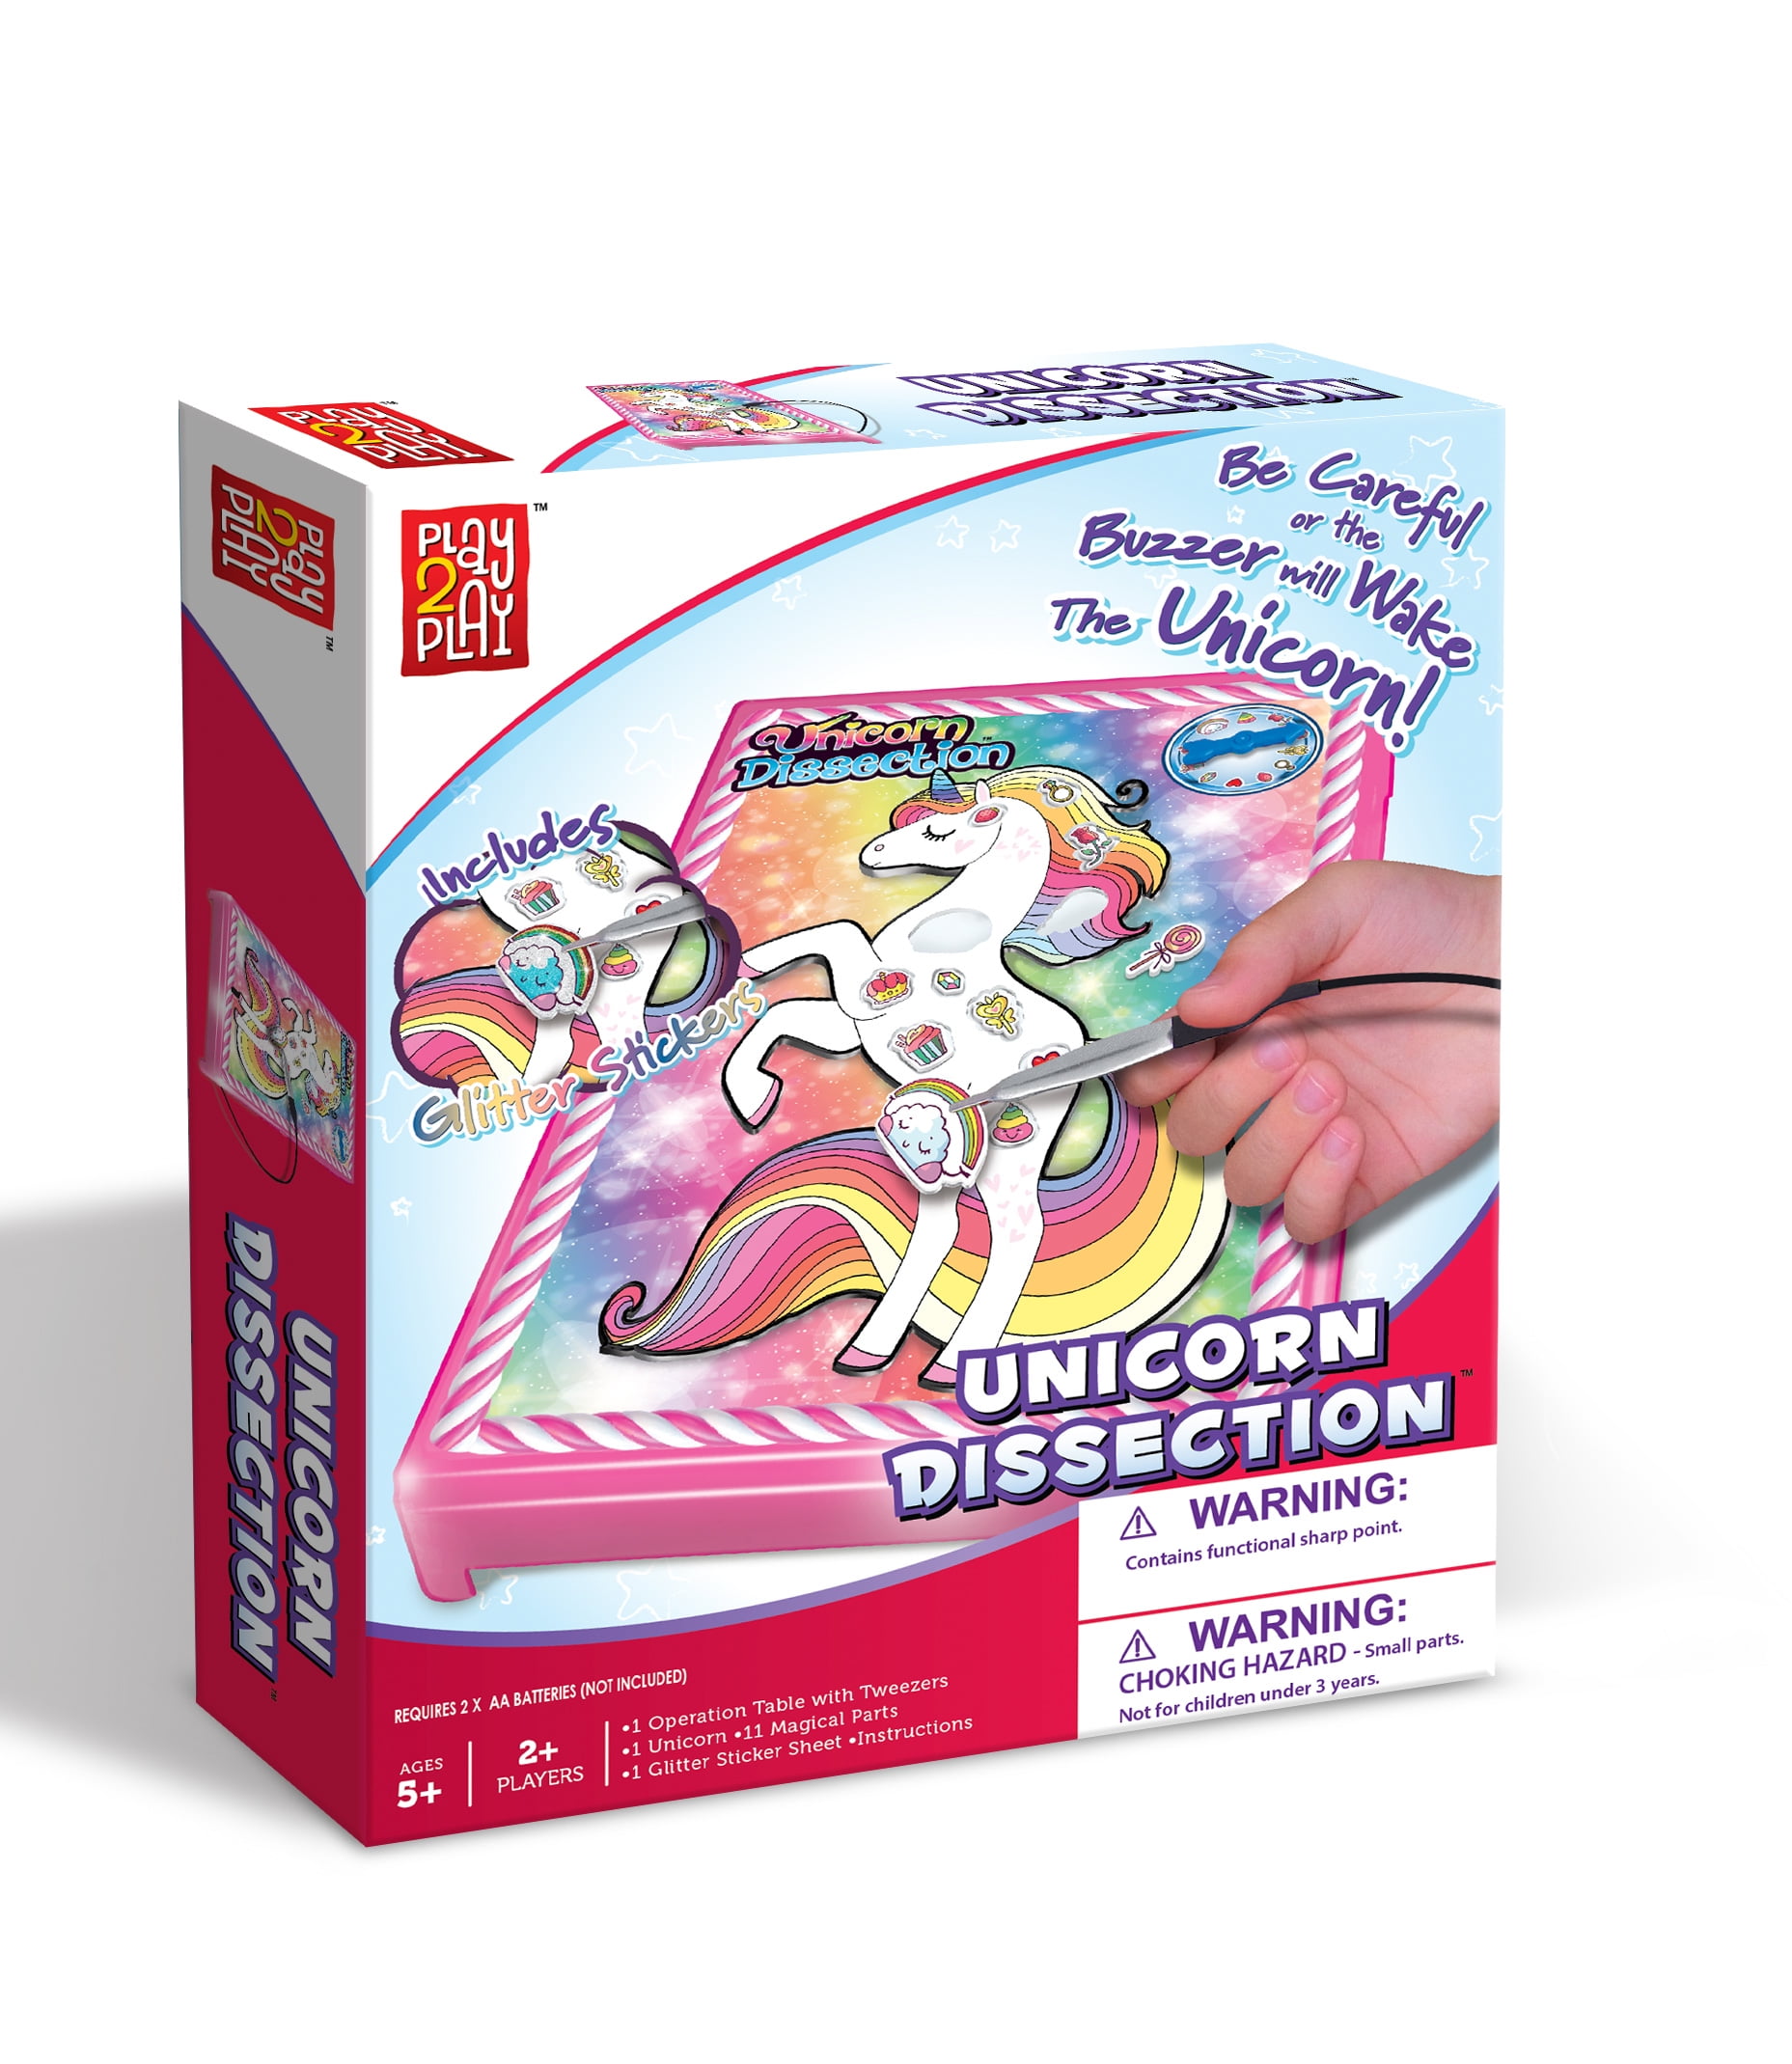 Unicorn Operation Game Kids Girls Family Fun Skills Classic Board Game Play Gift 